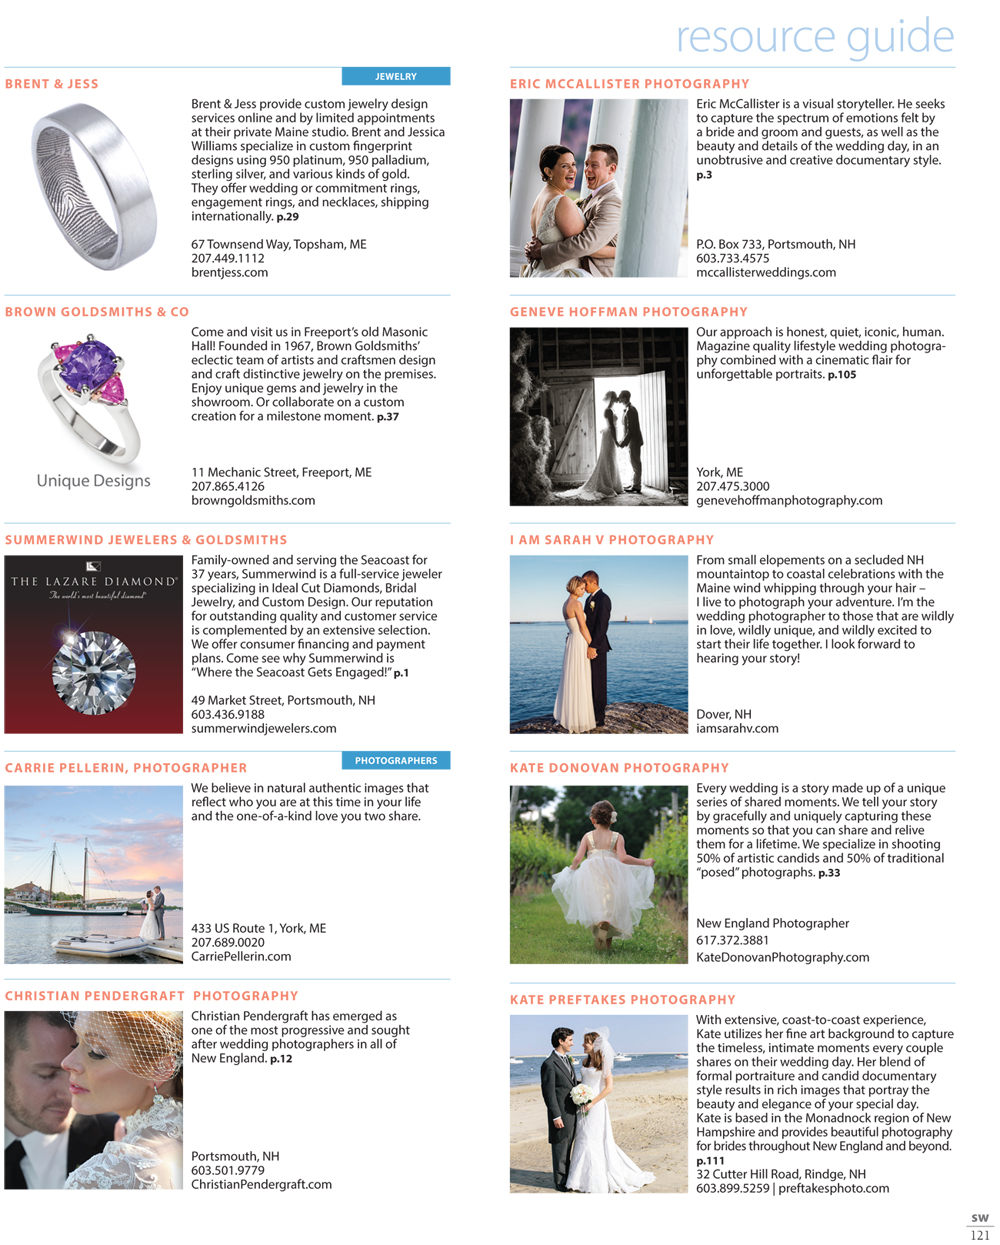 Seacoast Weddings Magazine Resource Guide I AM SARAH V Photography